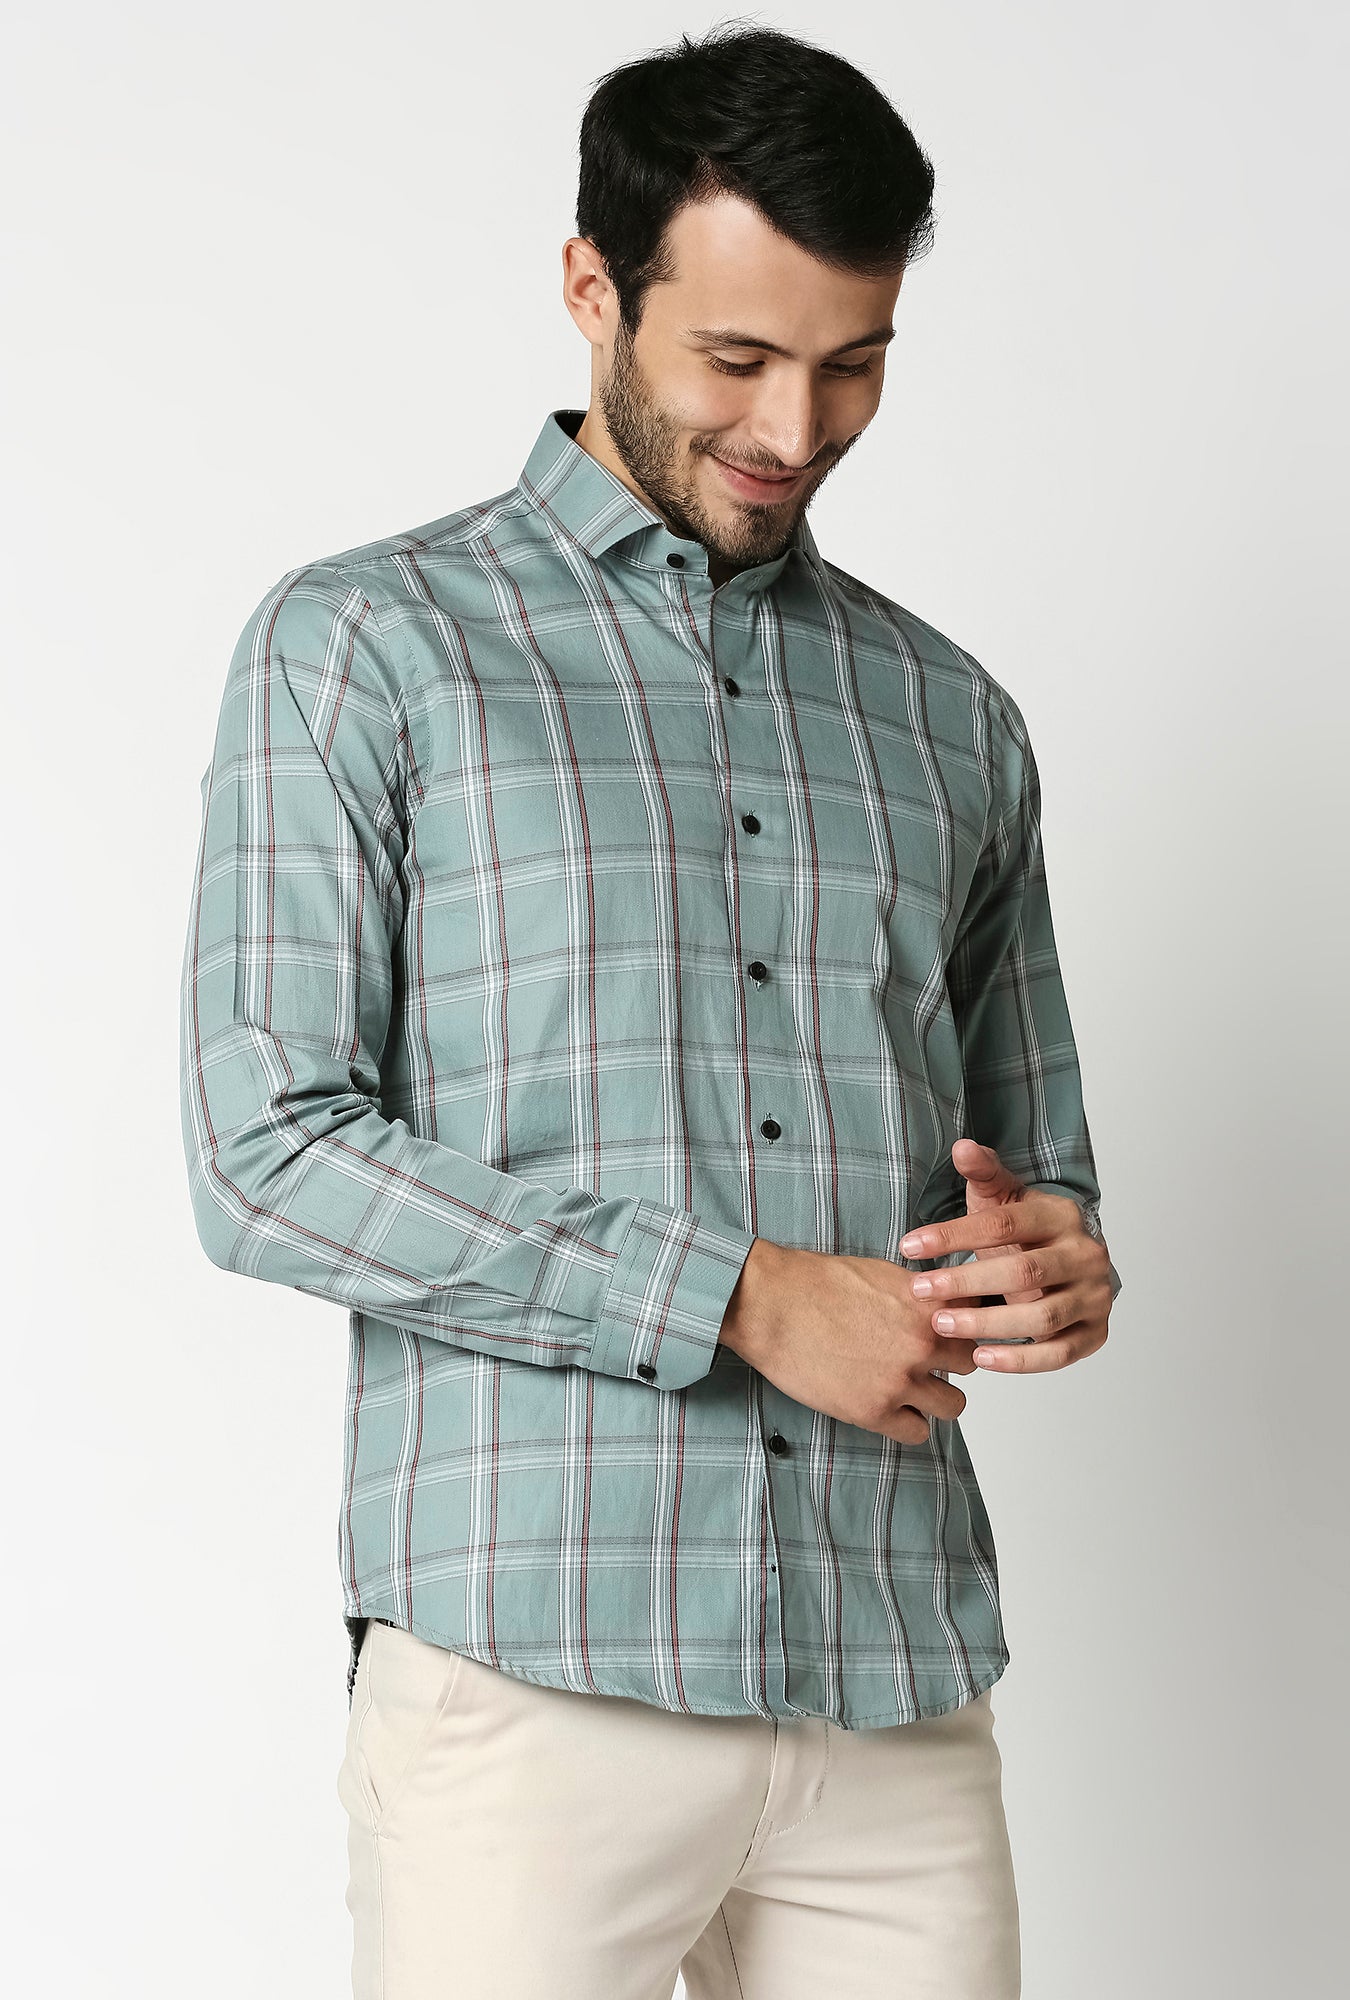 Fostino Checks Green Full Sleeves Shirt - Fostino - Shirts